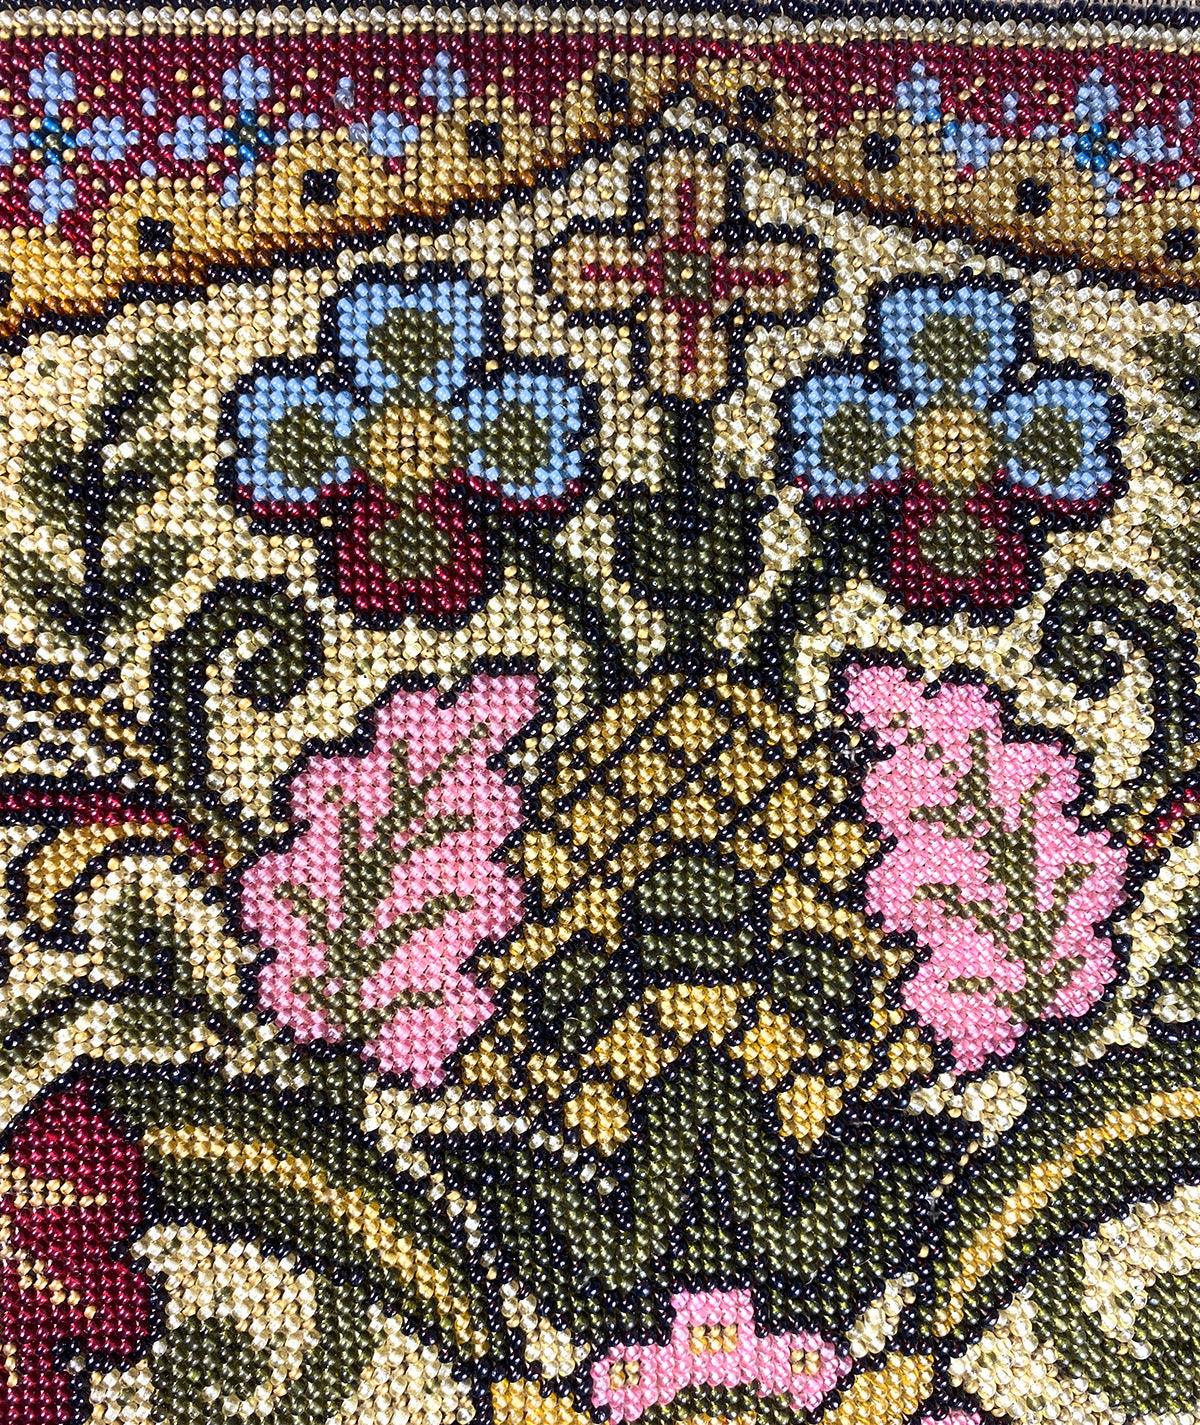 Antique Victorian Beadwork Needlepoint 20" x 9" Panel, Tea Tray or Make a Pillow